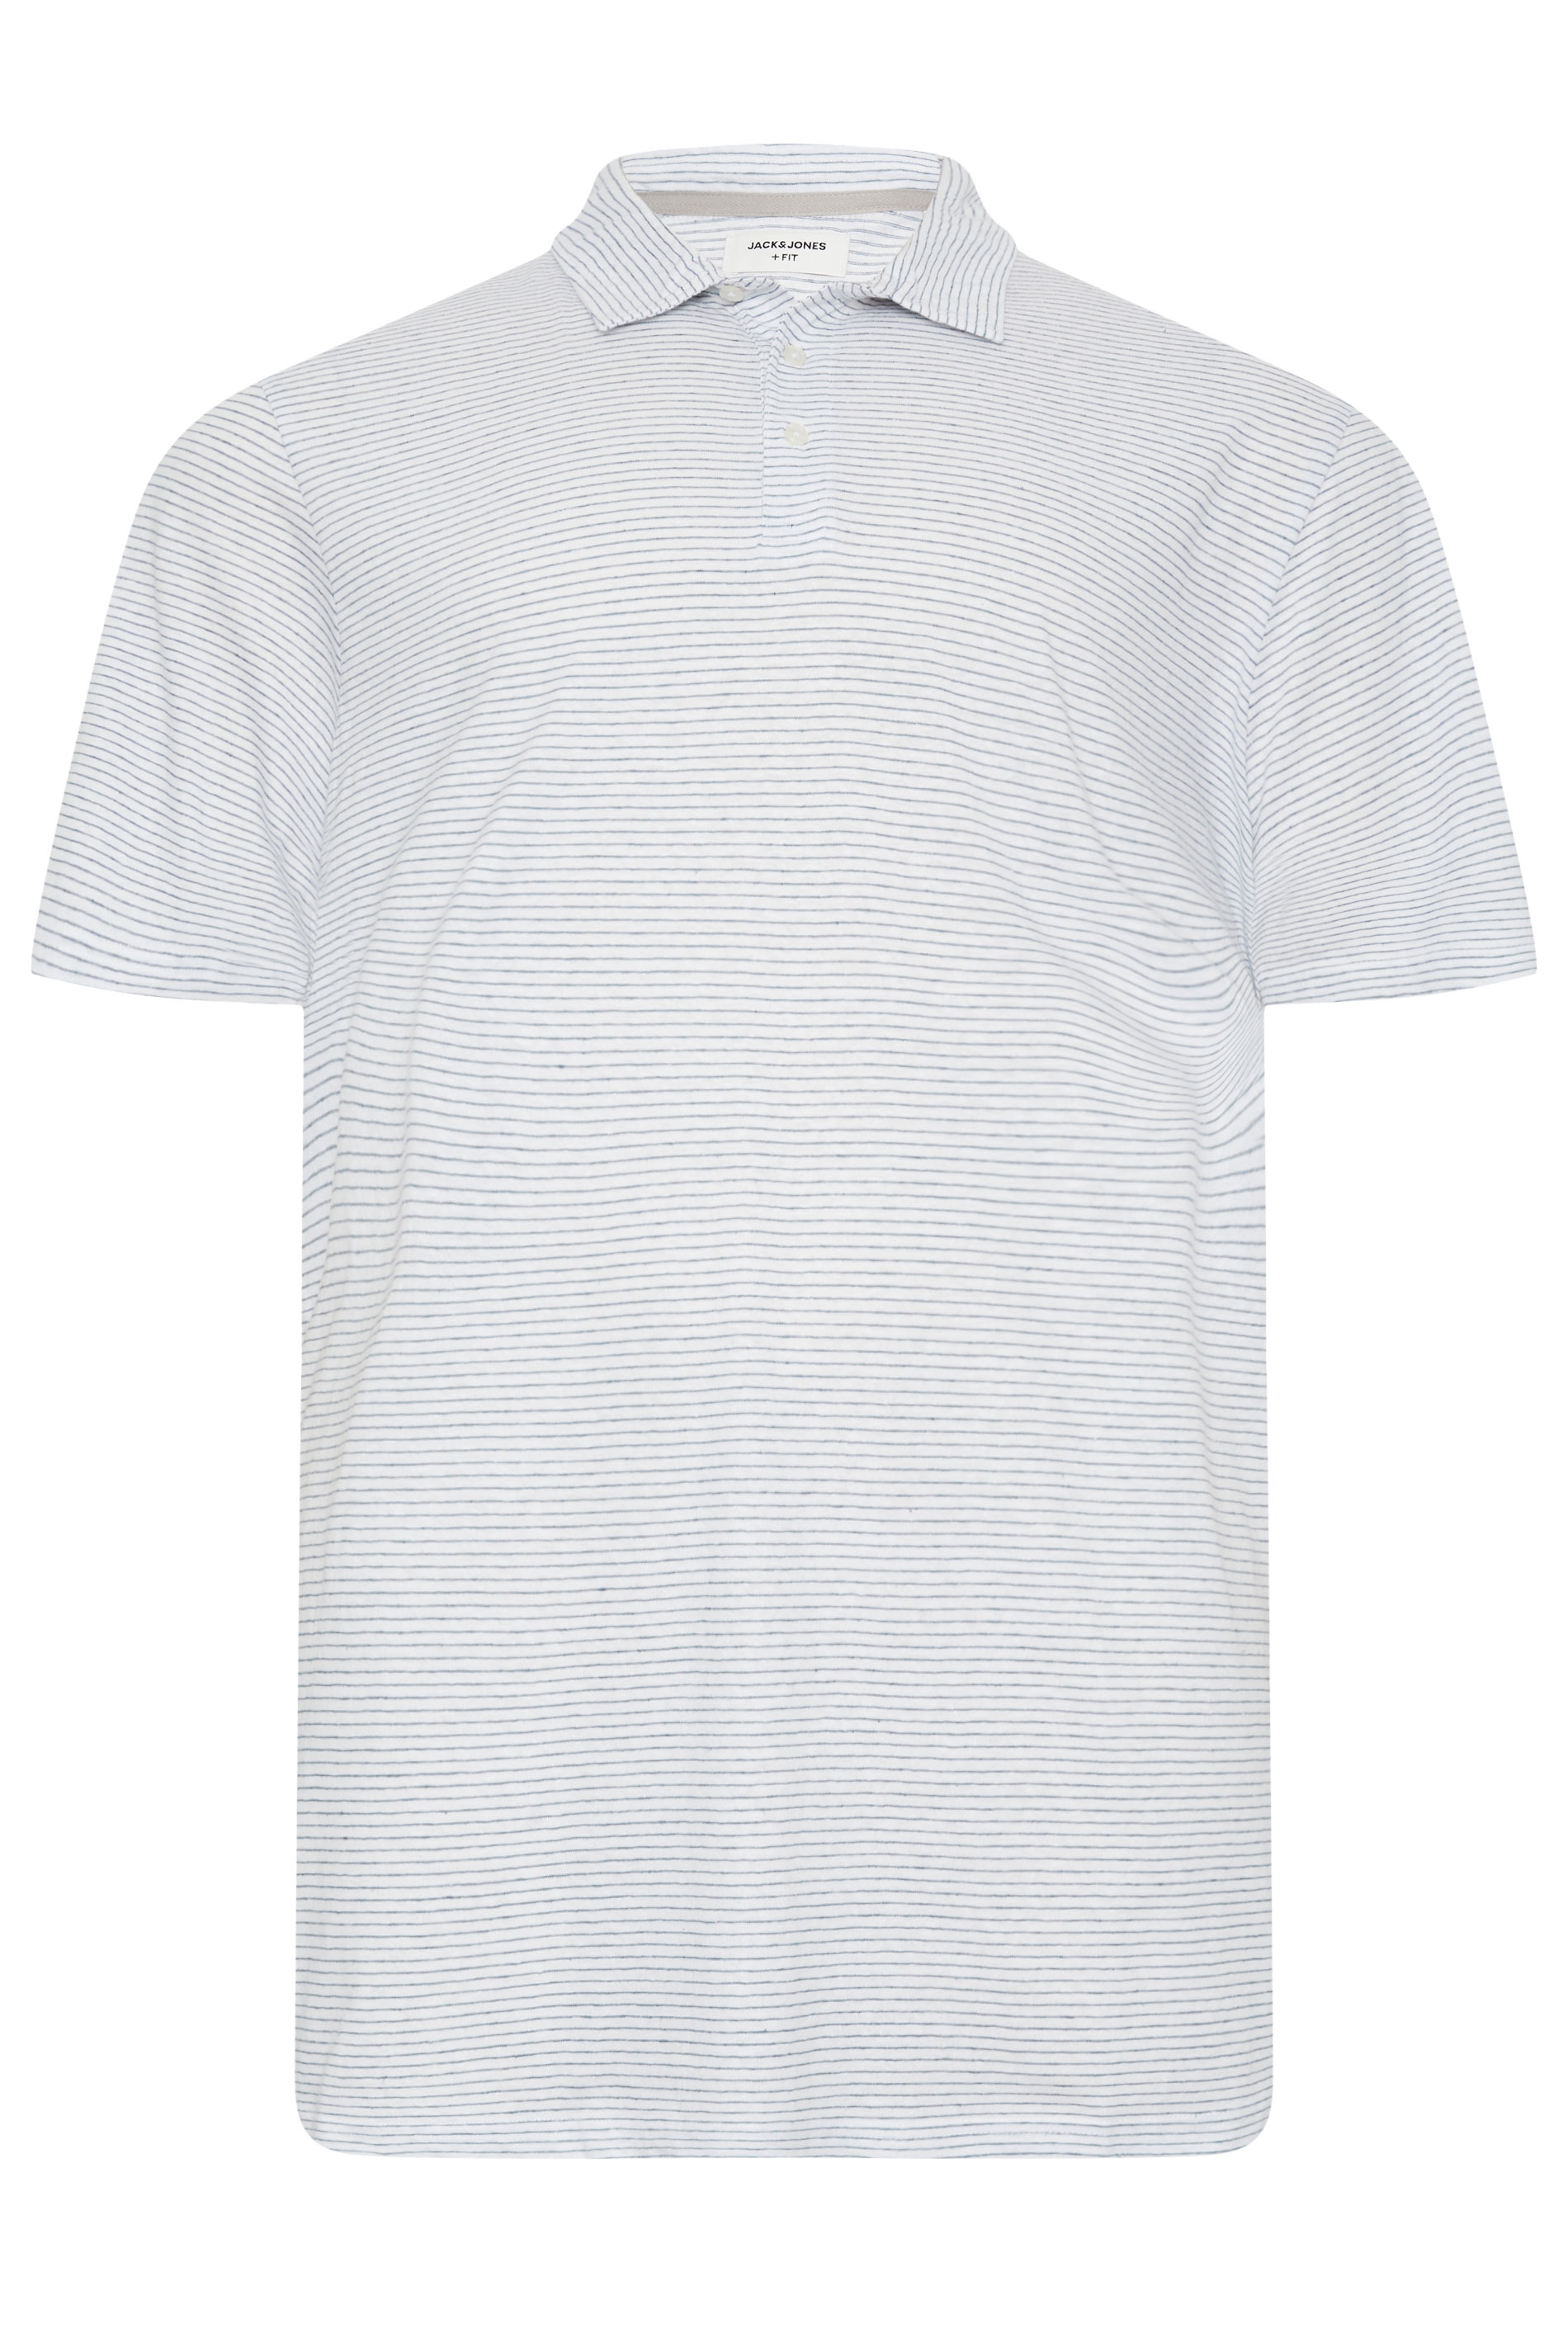 JACK & JONES Big & Tall White & Blue Striped Linen Polo Shirt | BadRhino 3